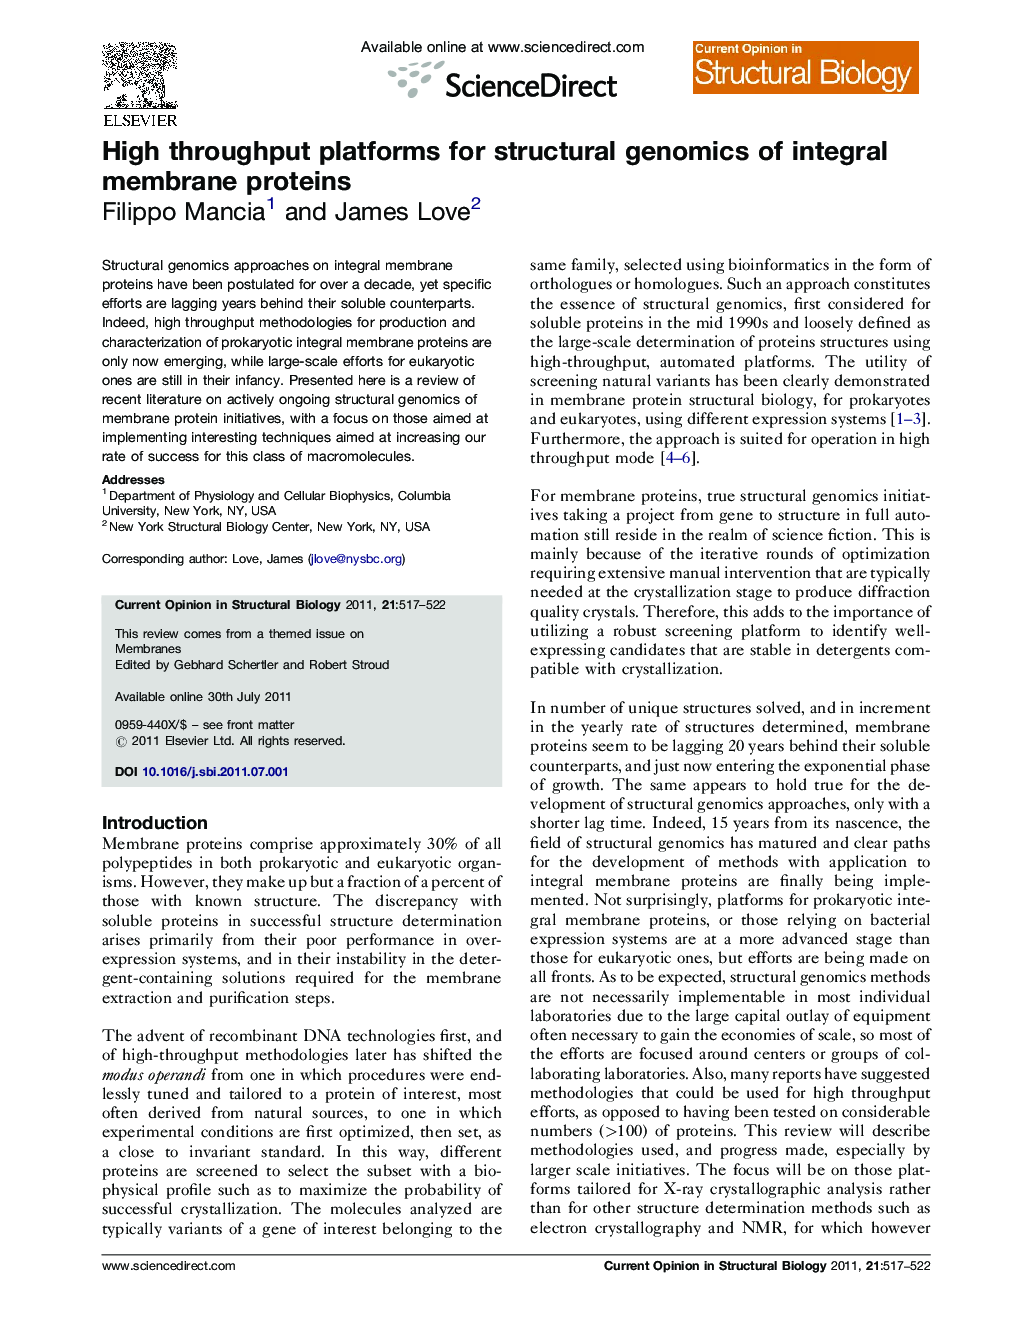 High throughput platforms for structural genomics of integral membrane proteins